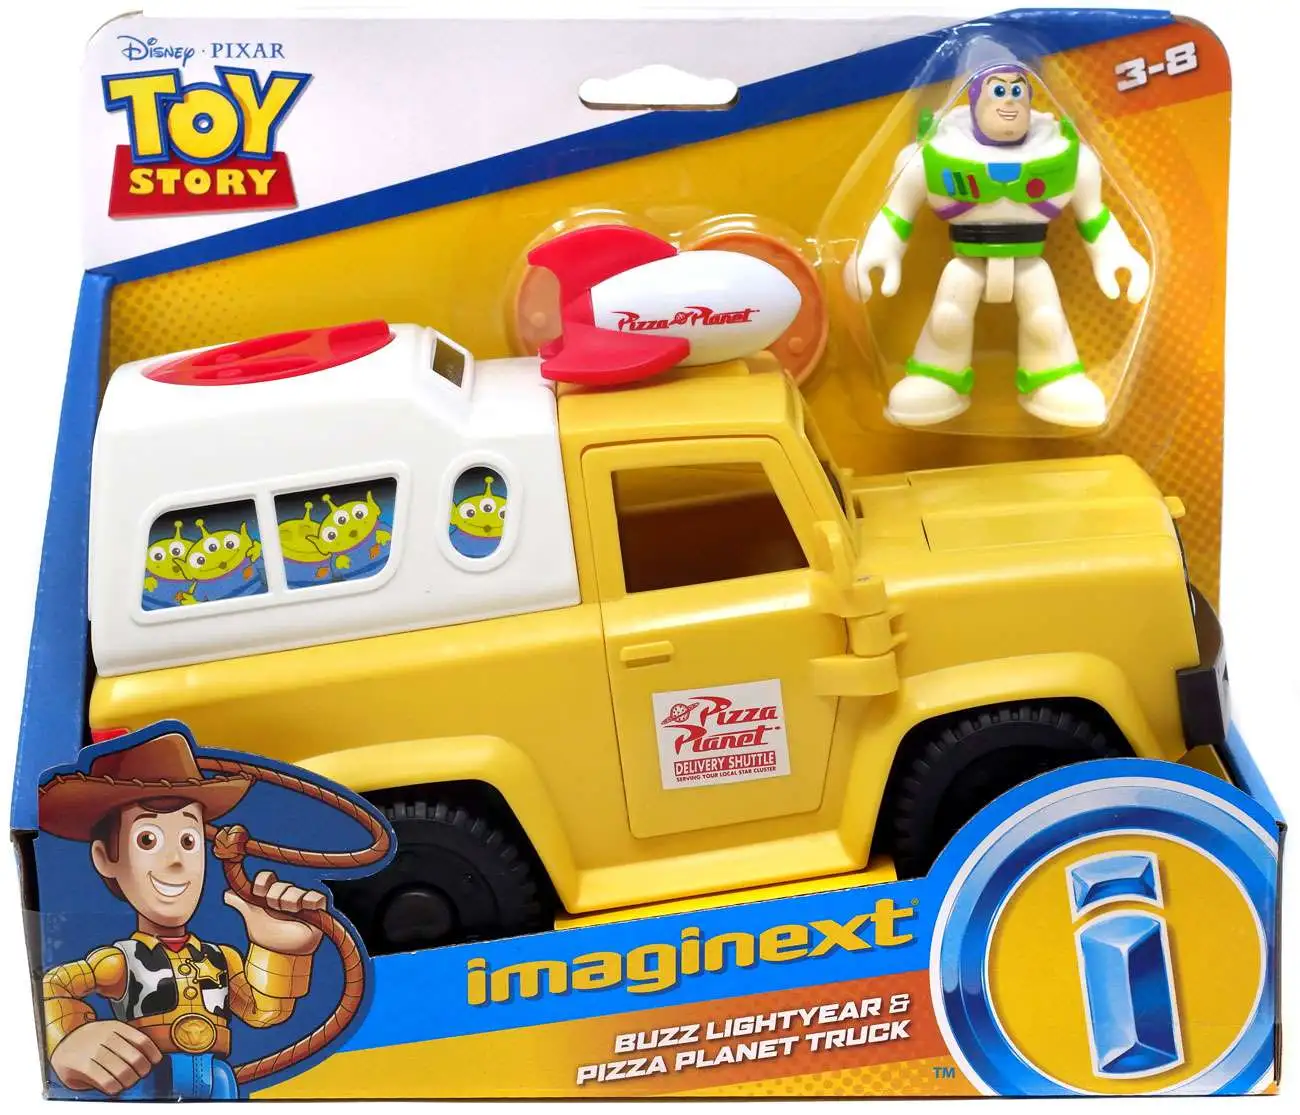 Imaginext Disney Pixar Toy Story 4 Buzz Lightyear & Pizza Planet Truck New 